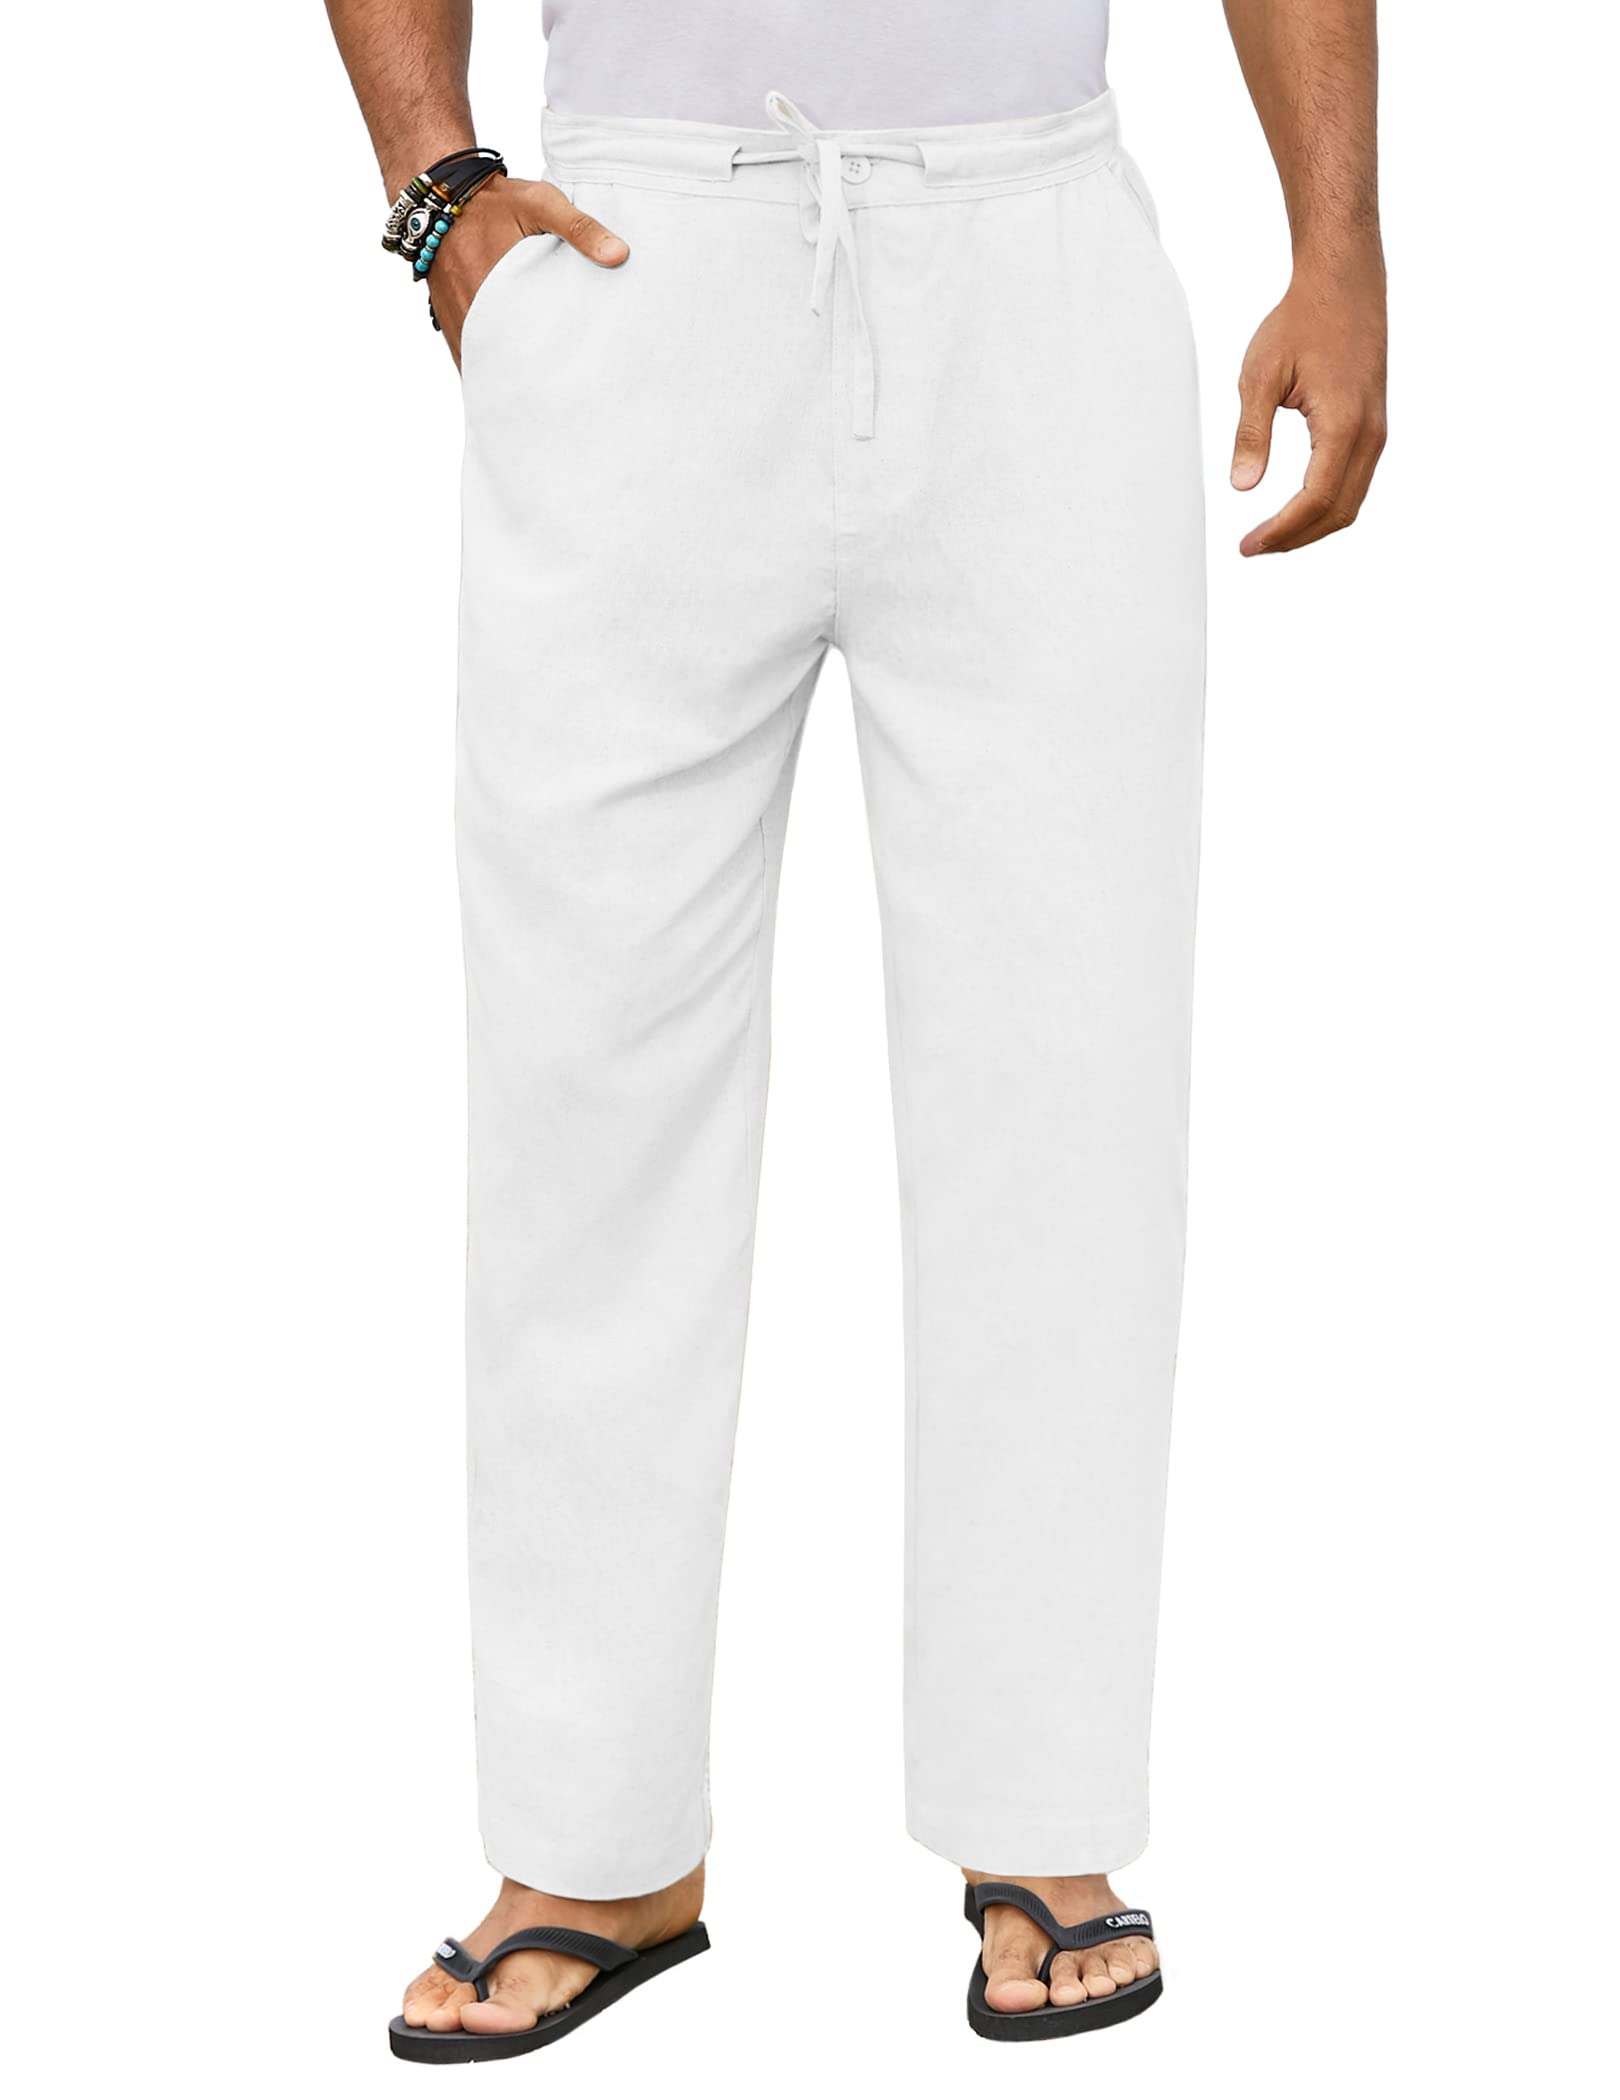 White Mens Linen Pants, Lounge Pants, Pants for Men, Mans White Pants,  Wedding Linen Pants, Drawstring Pants, Summer Pants 